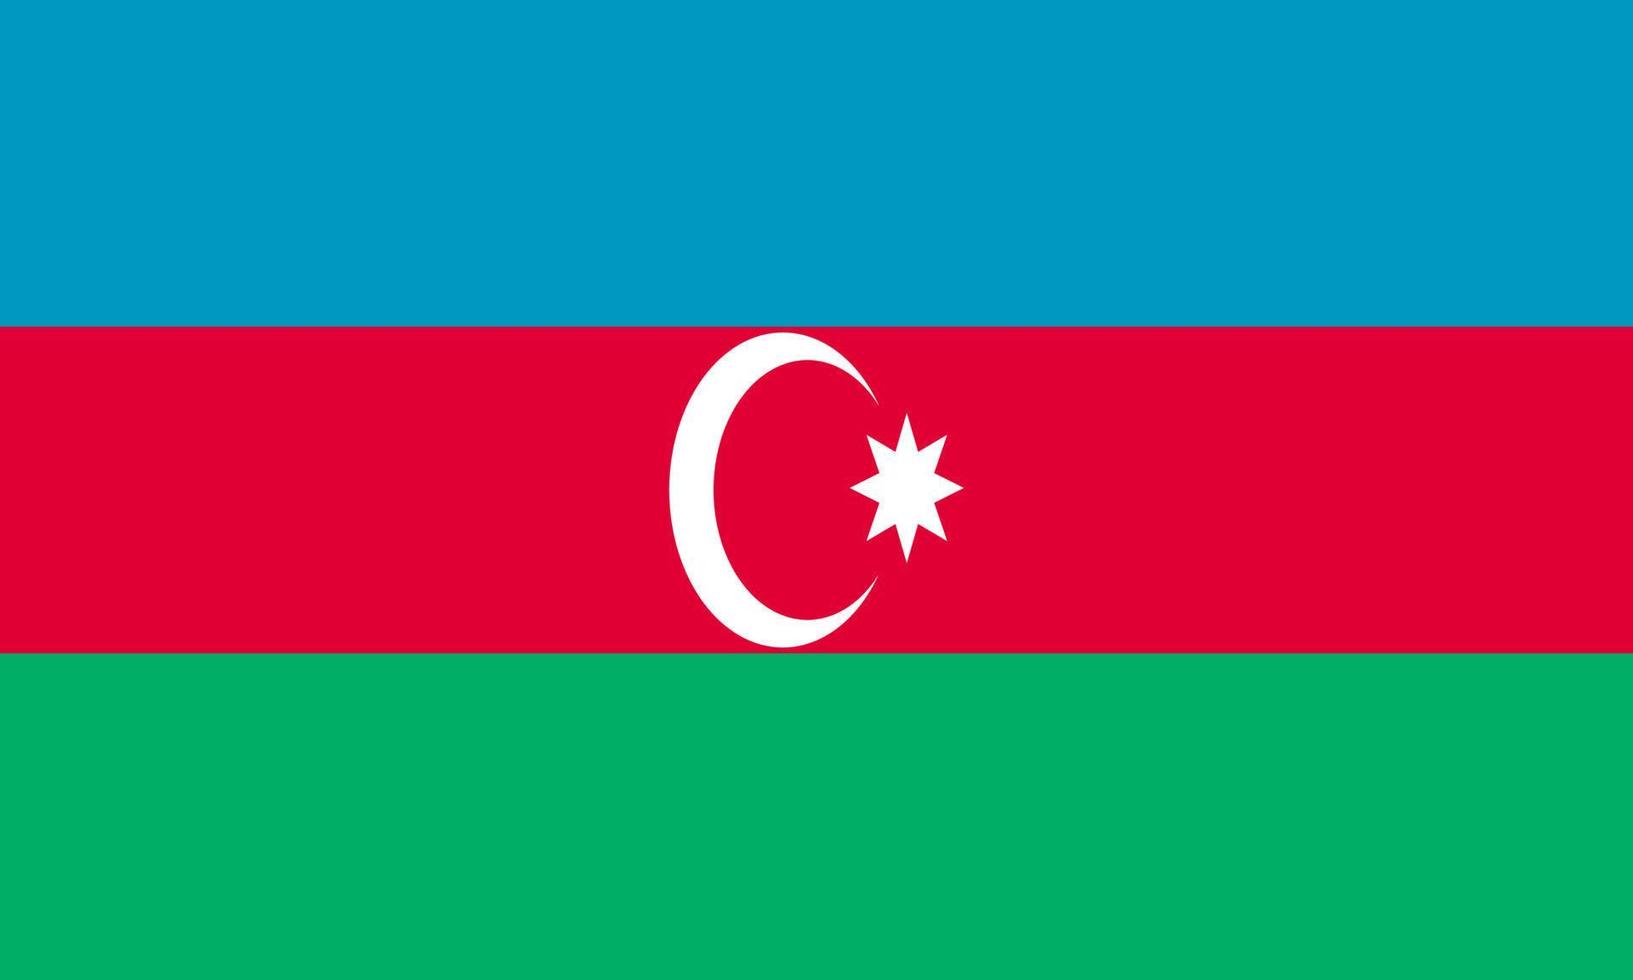 Vector illustration of the Azerbaiyan flag